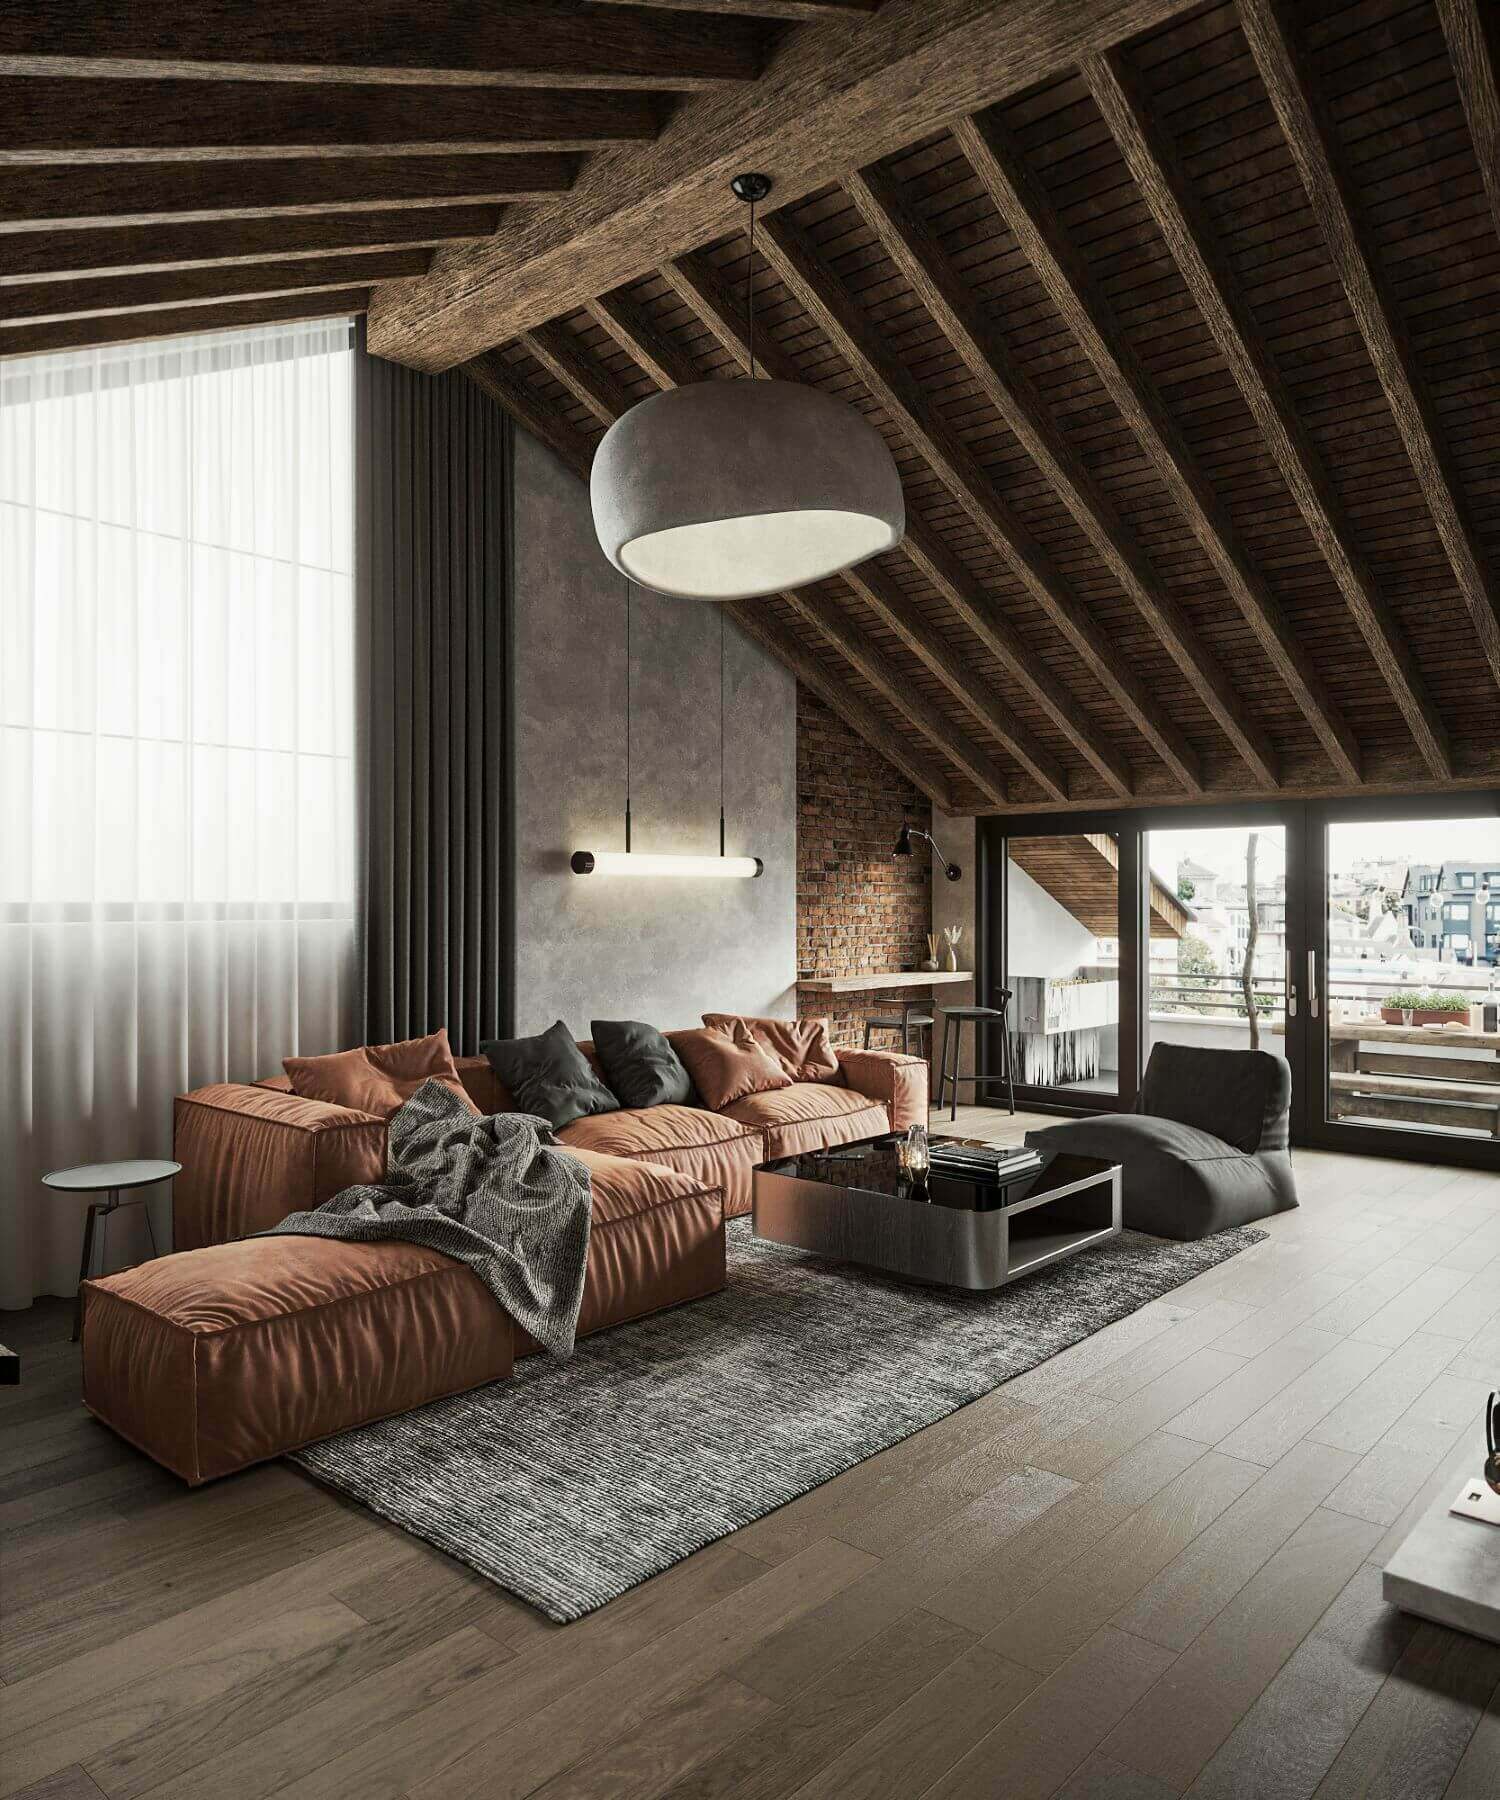 Living Room & Kitchen Design By Ney' Smart / Ney Architects